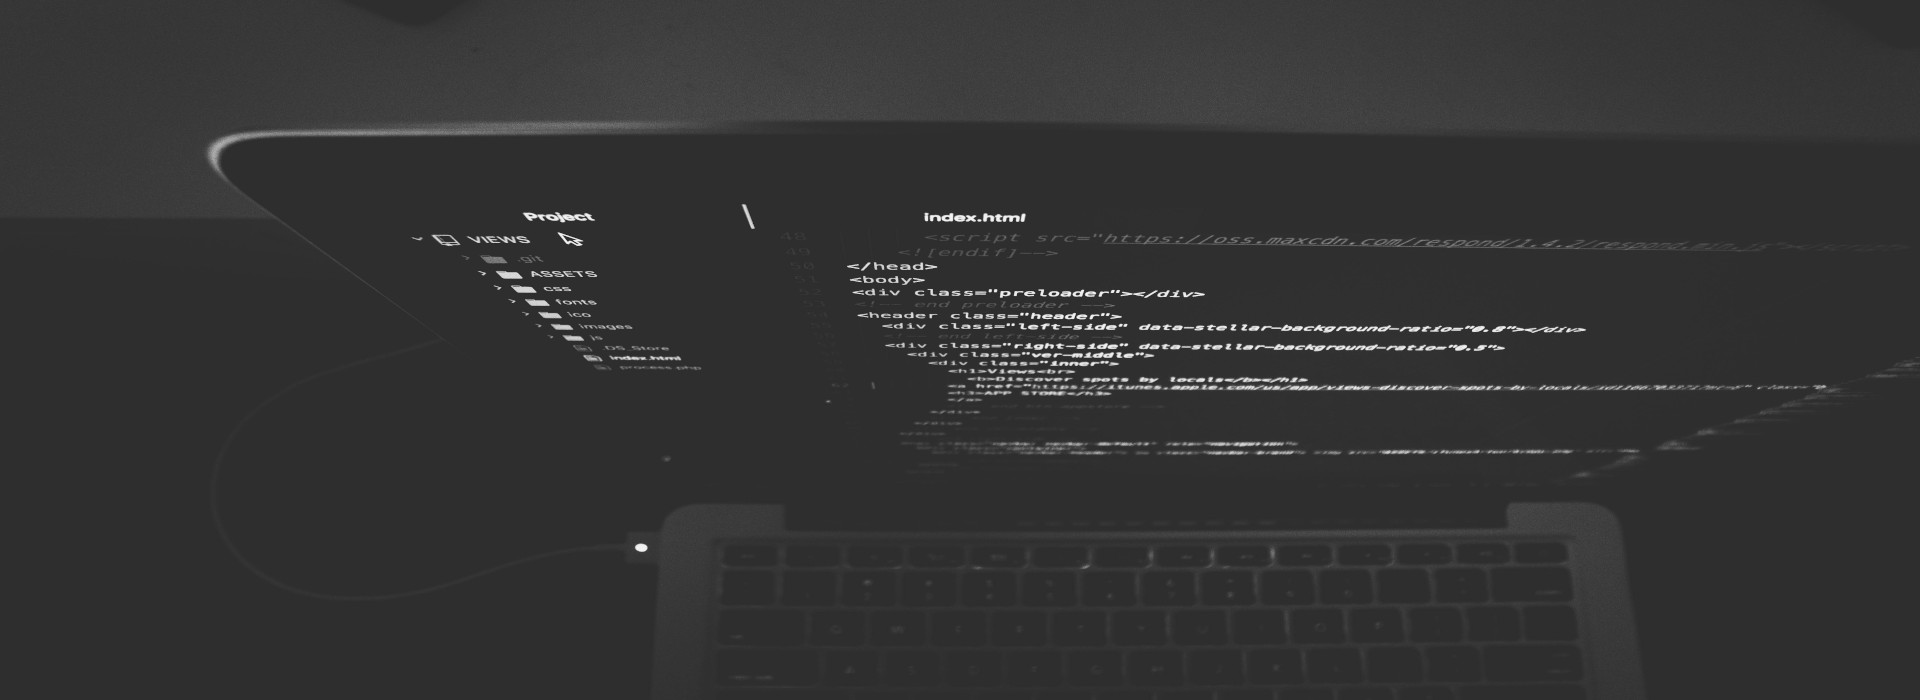 A coding scene in a laptop